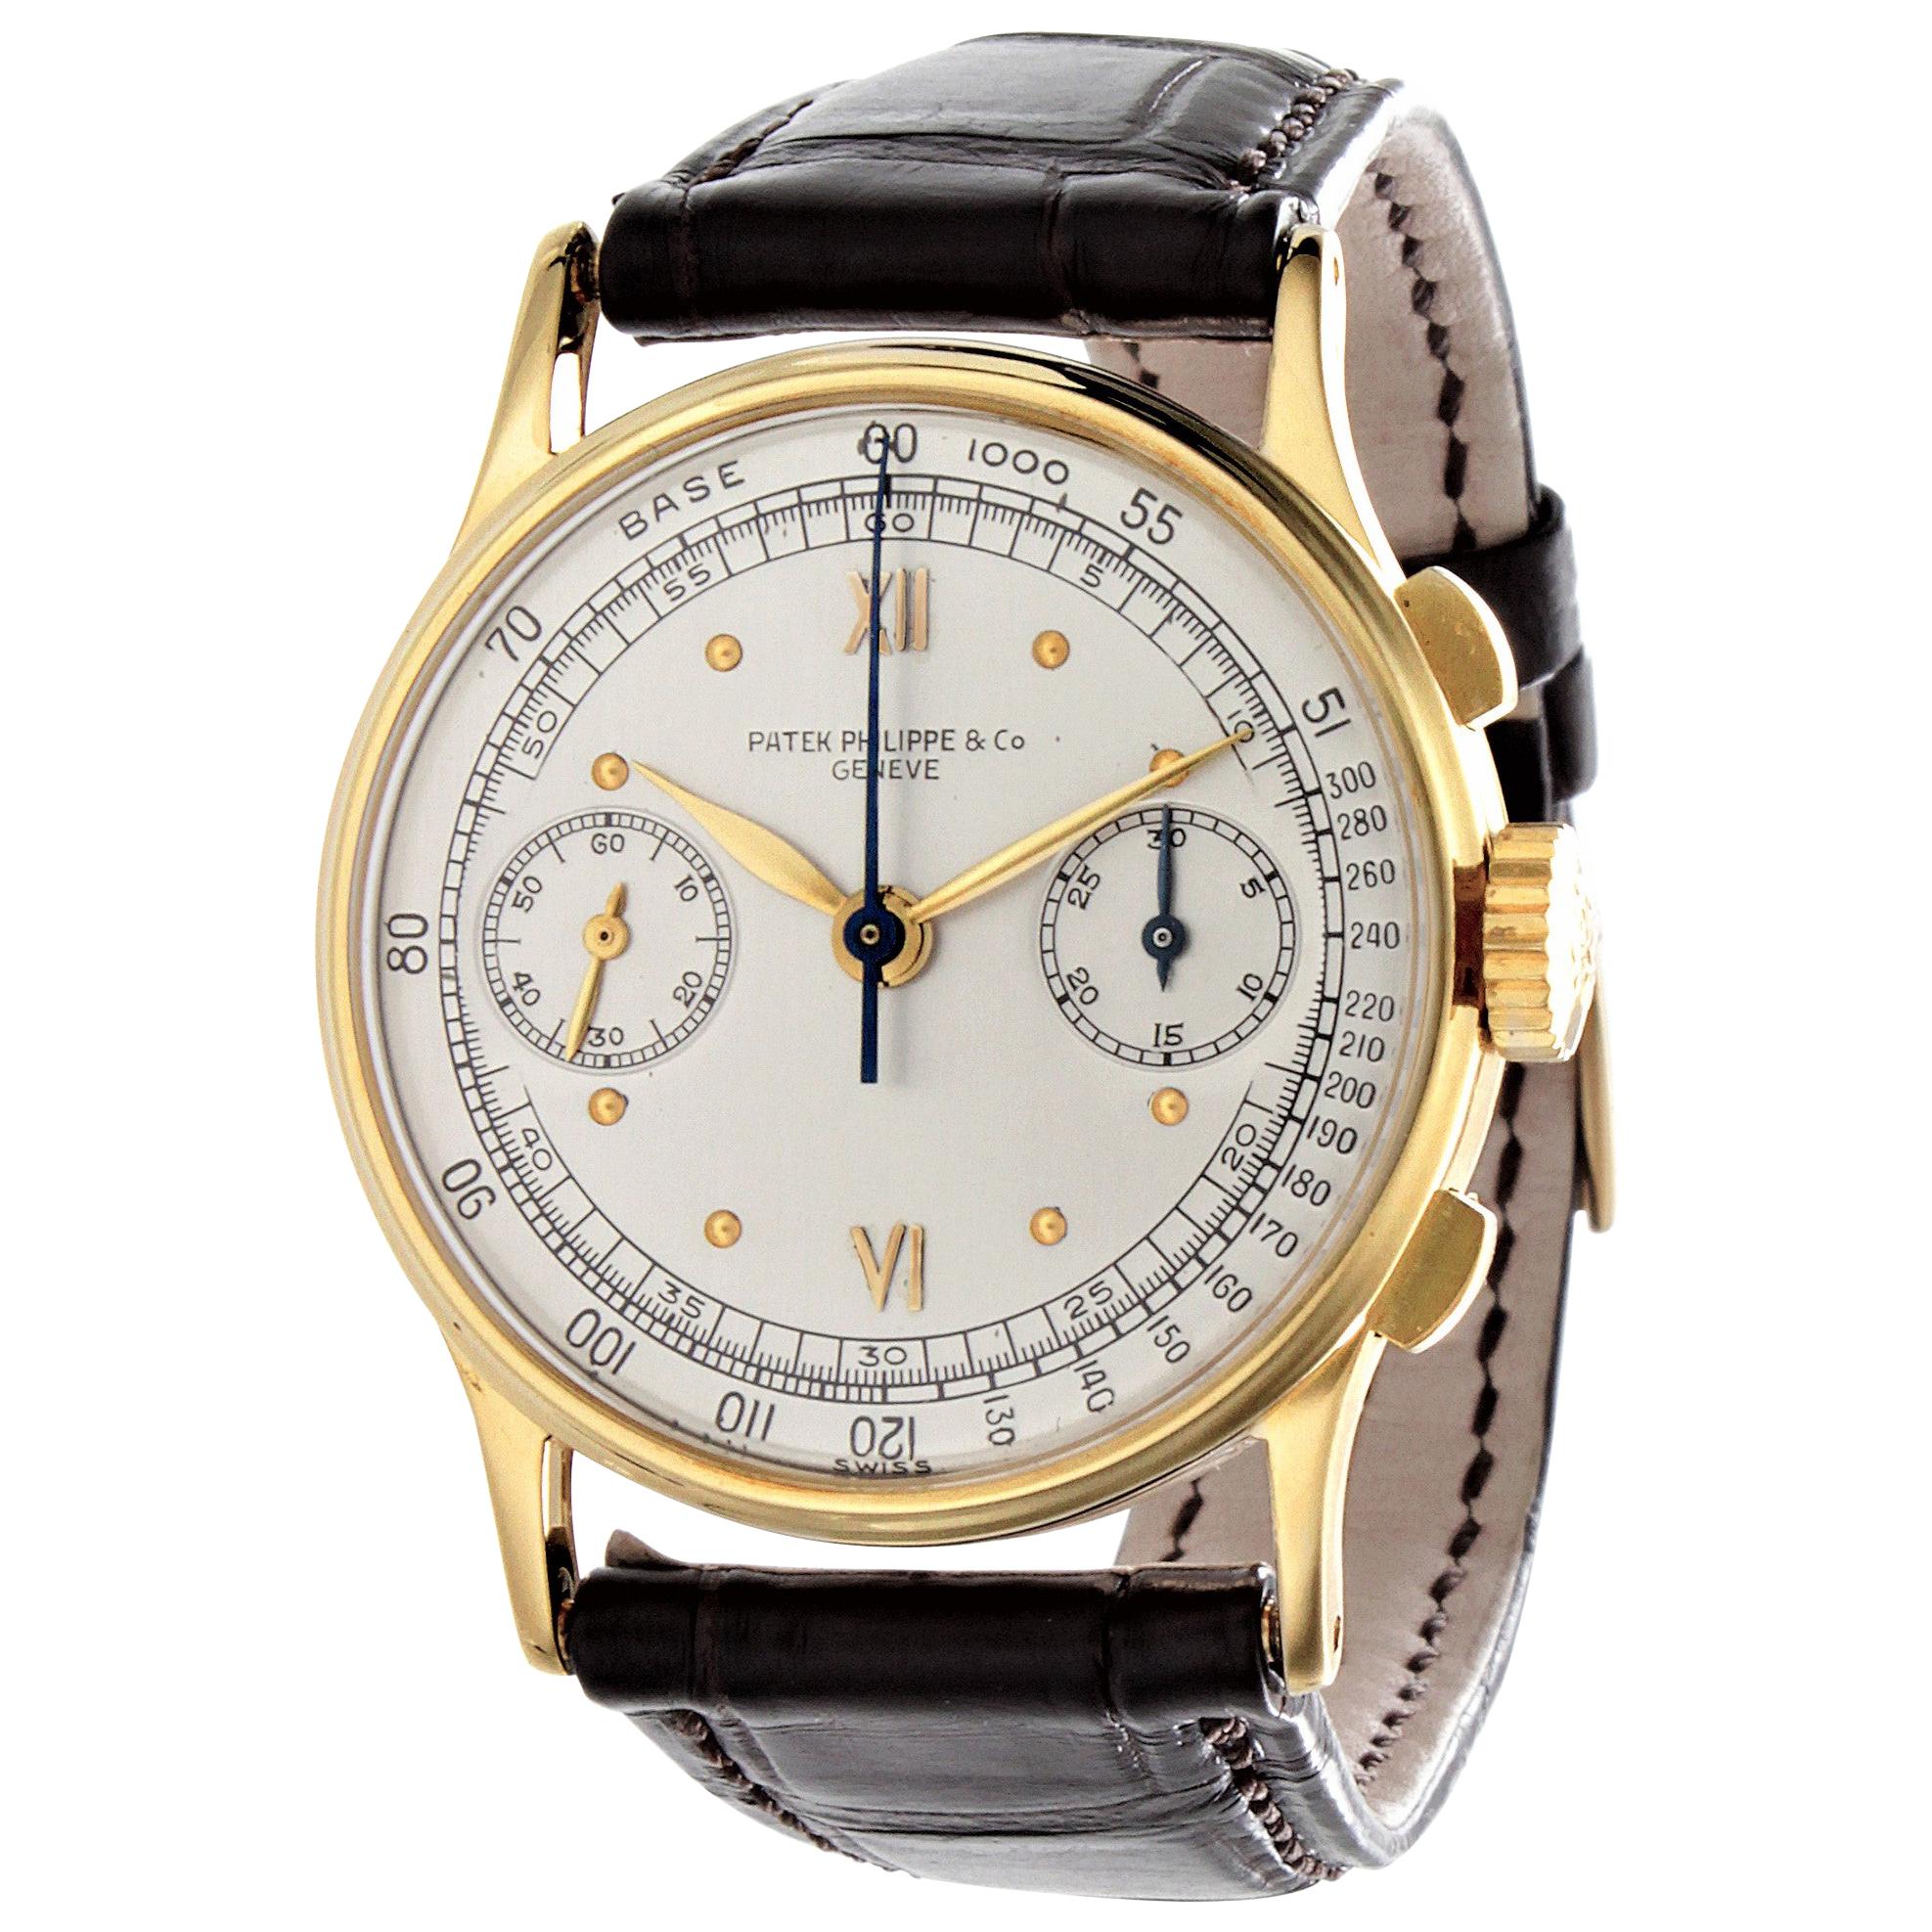 Patek Philippe 130J Vintage Chronograph Watch, Circa 1940